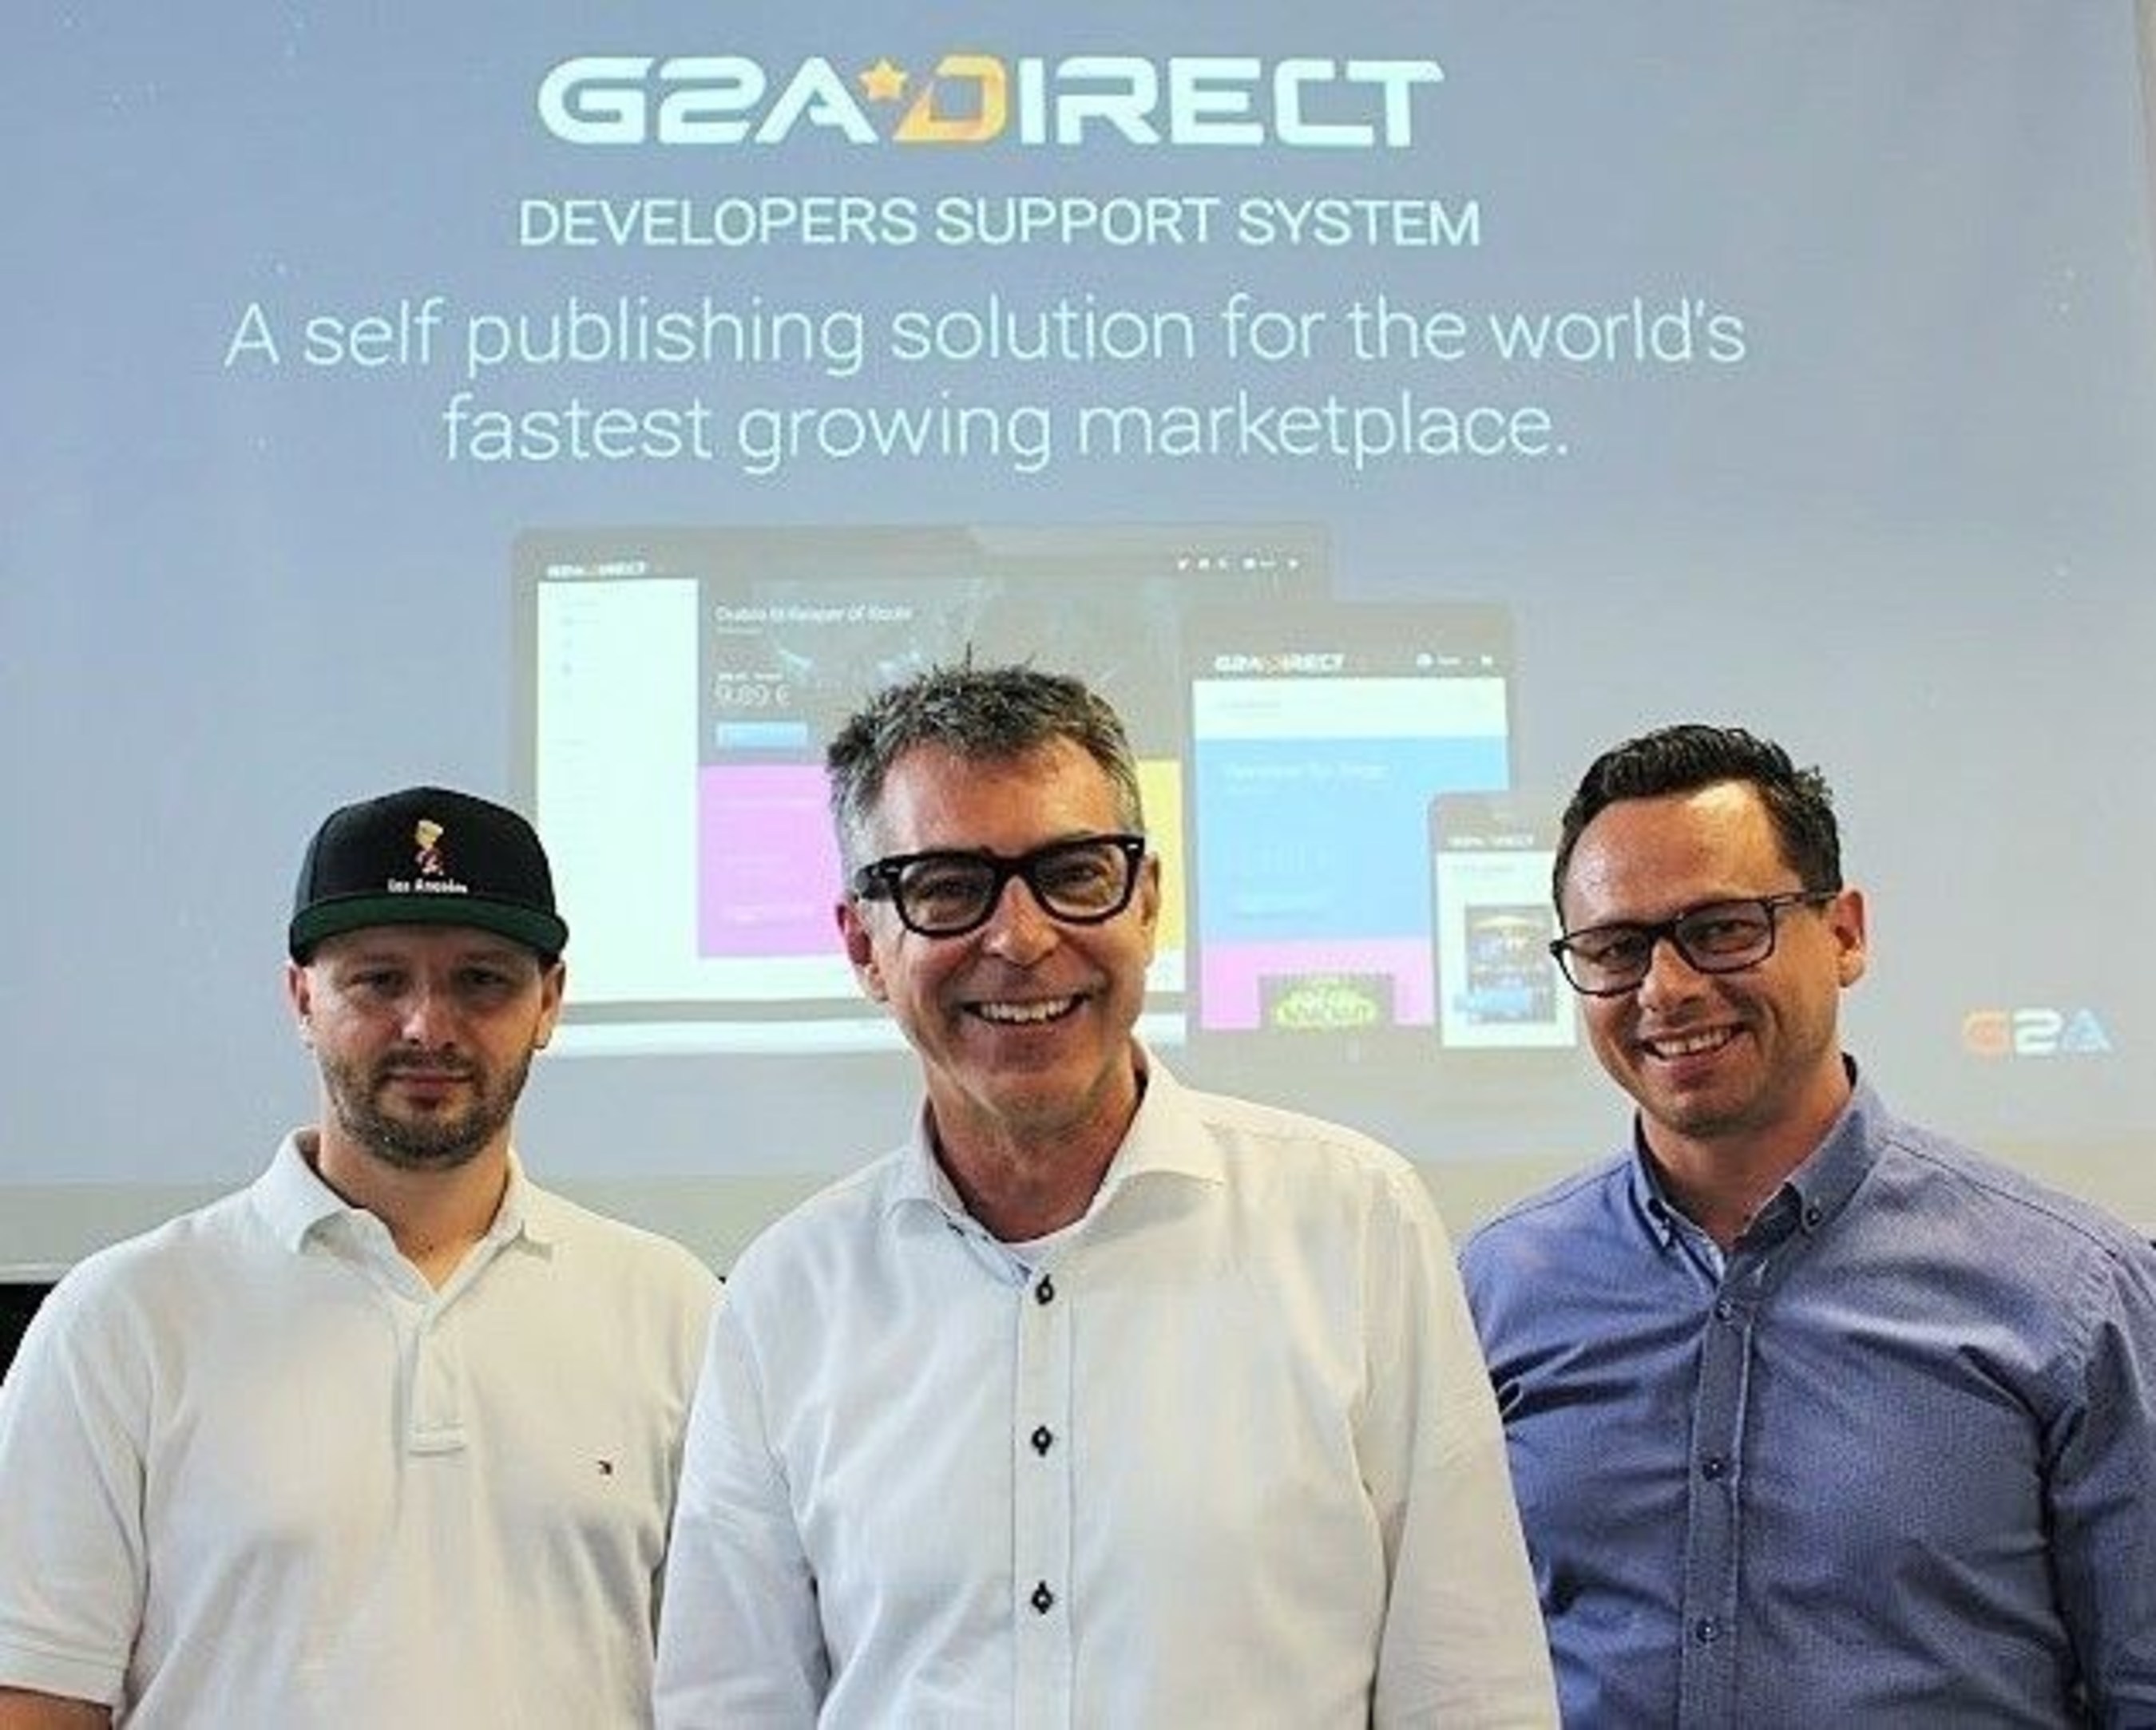 The G2A Direct Team - Left to Right, Mario Mirek - G2A Direct partnerships Manager, Scott Millard G2A Direct Lead and Patryk Kadlec, Head of Global Business Development. (PRNewsFoto/G2A.com)